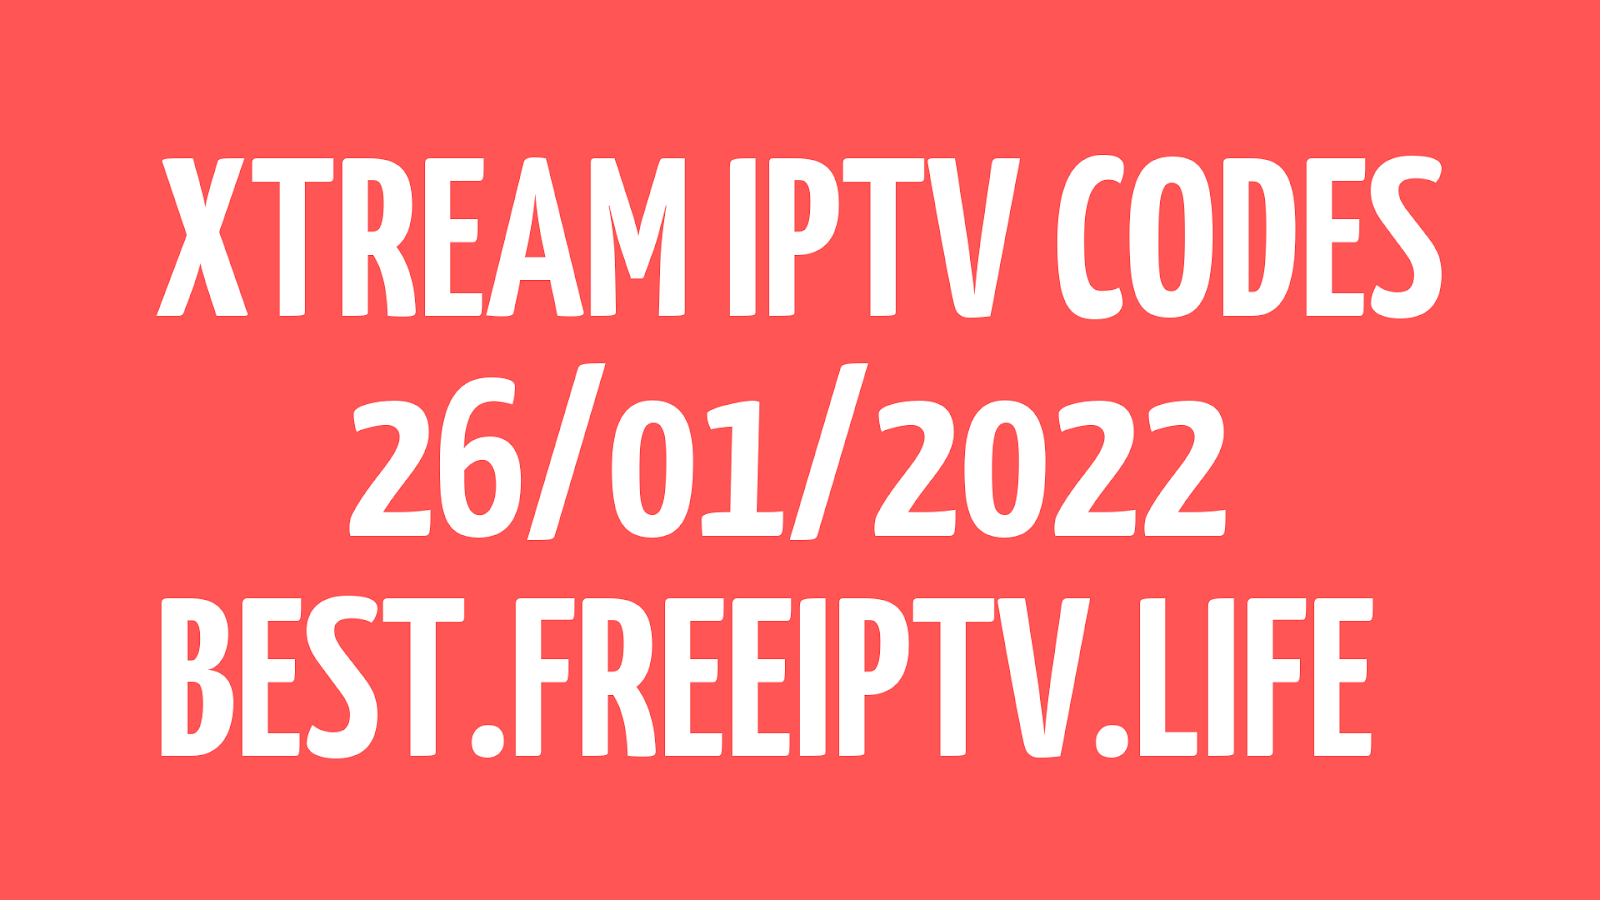 +265 XTREAM CODES IPTV STB EMU STALKER PORTAL MAC 26/01/2022